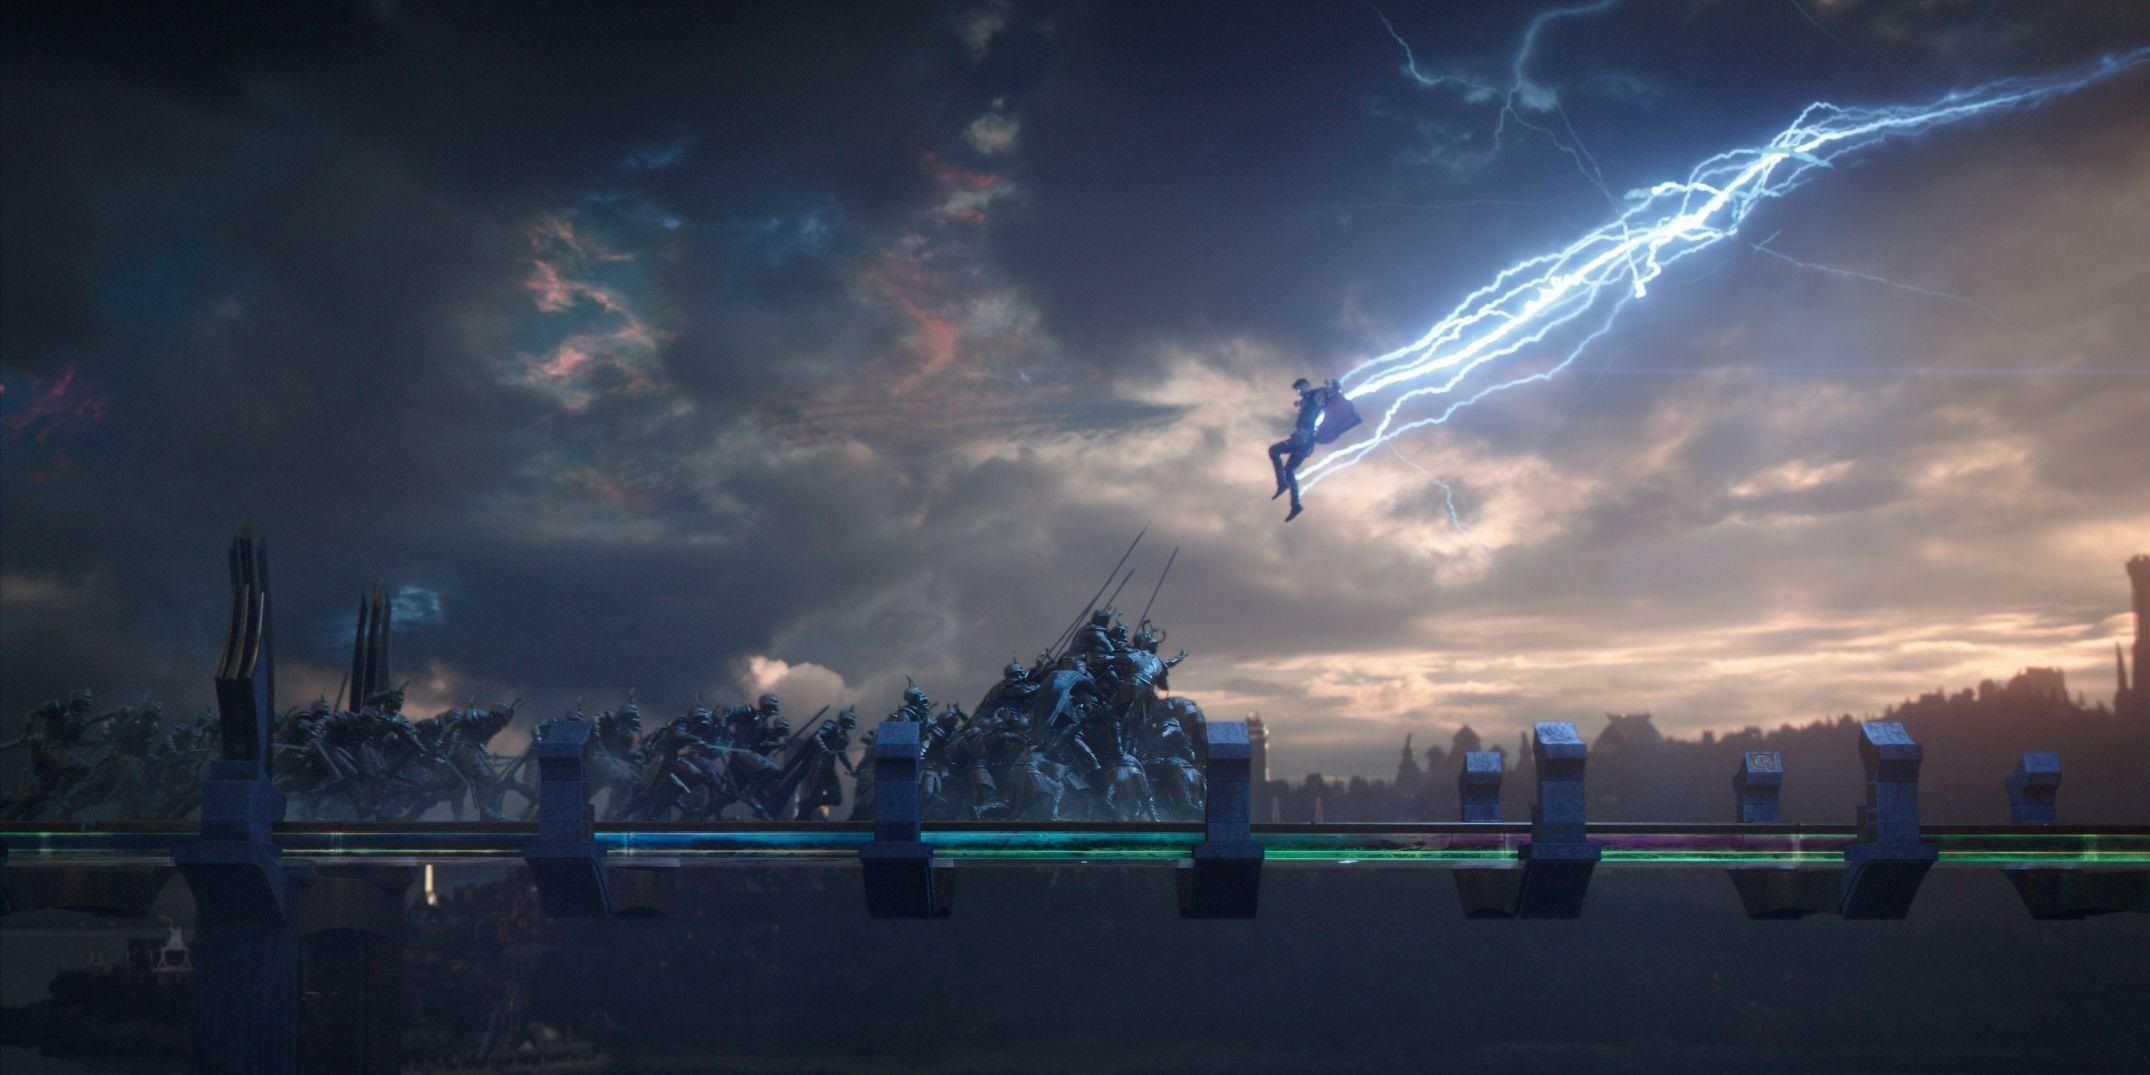 The final battle in Thor Ragnarok